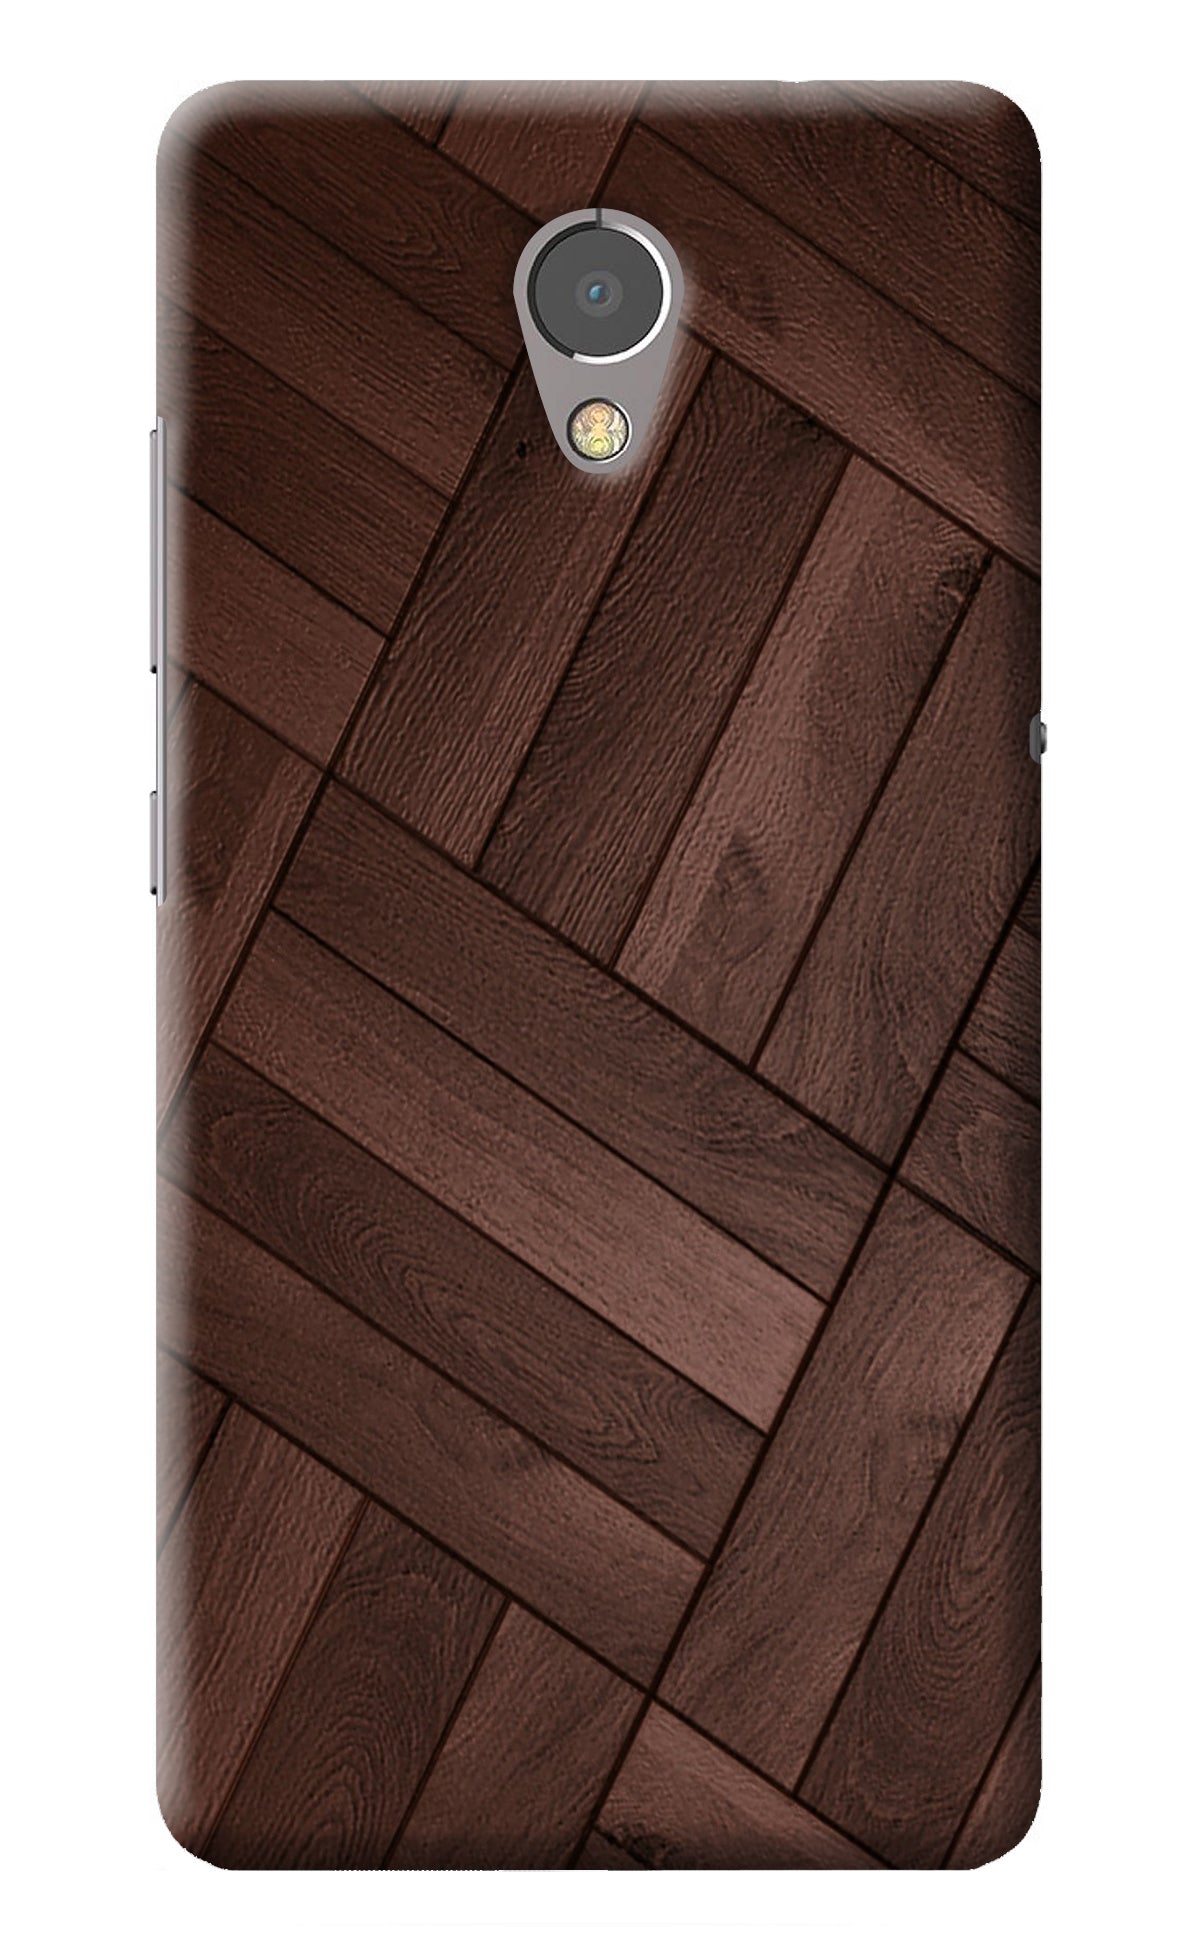 Wooden Texture Design Lenovo P2 Back Cover